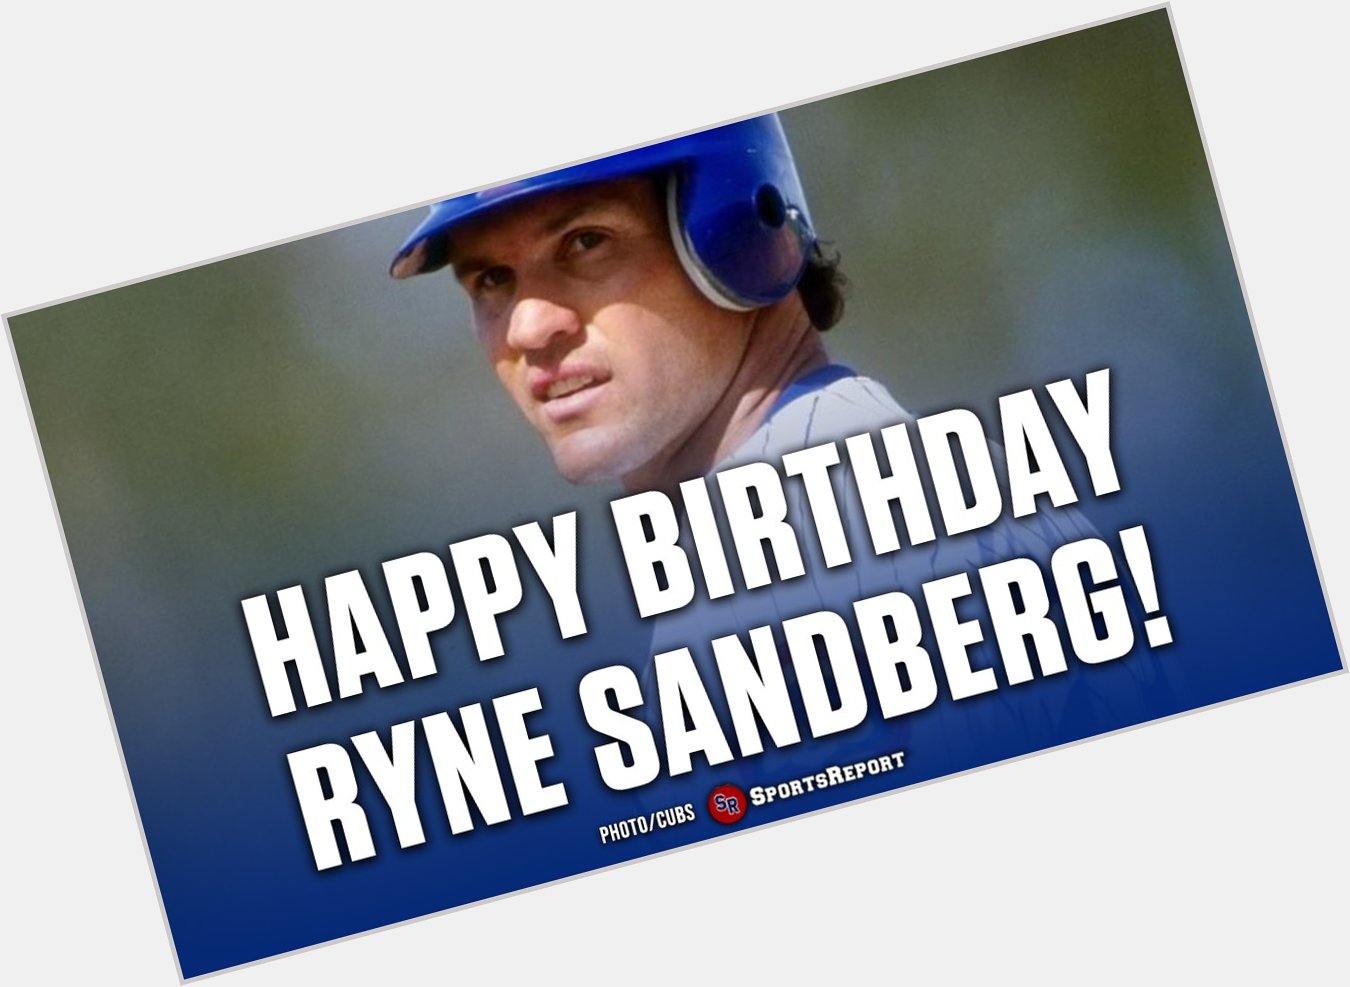  Fans, let\s wish legend Ryne Sandberg a Happy Birthday! GO CUBS!! 